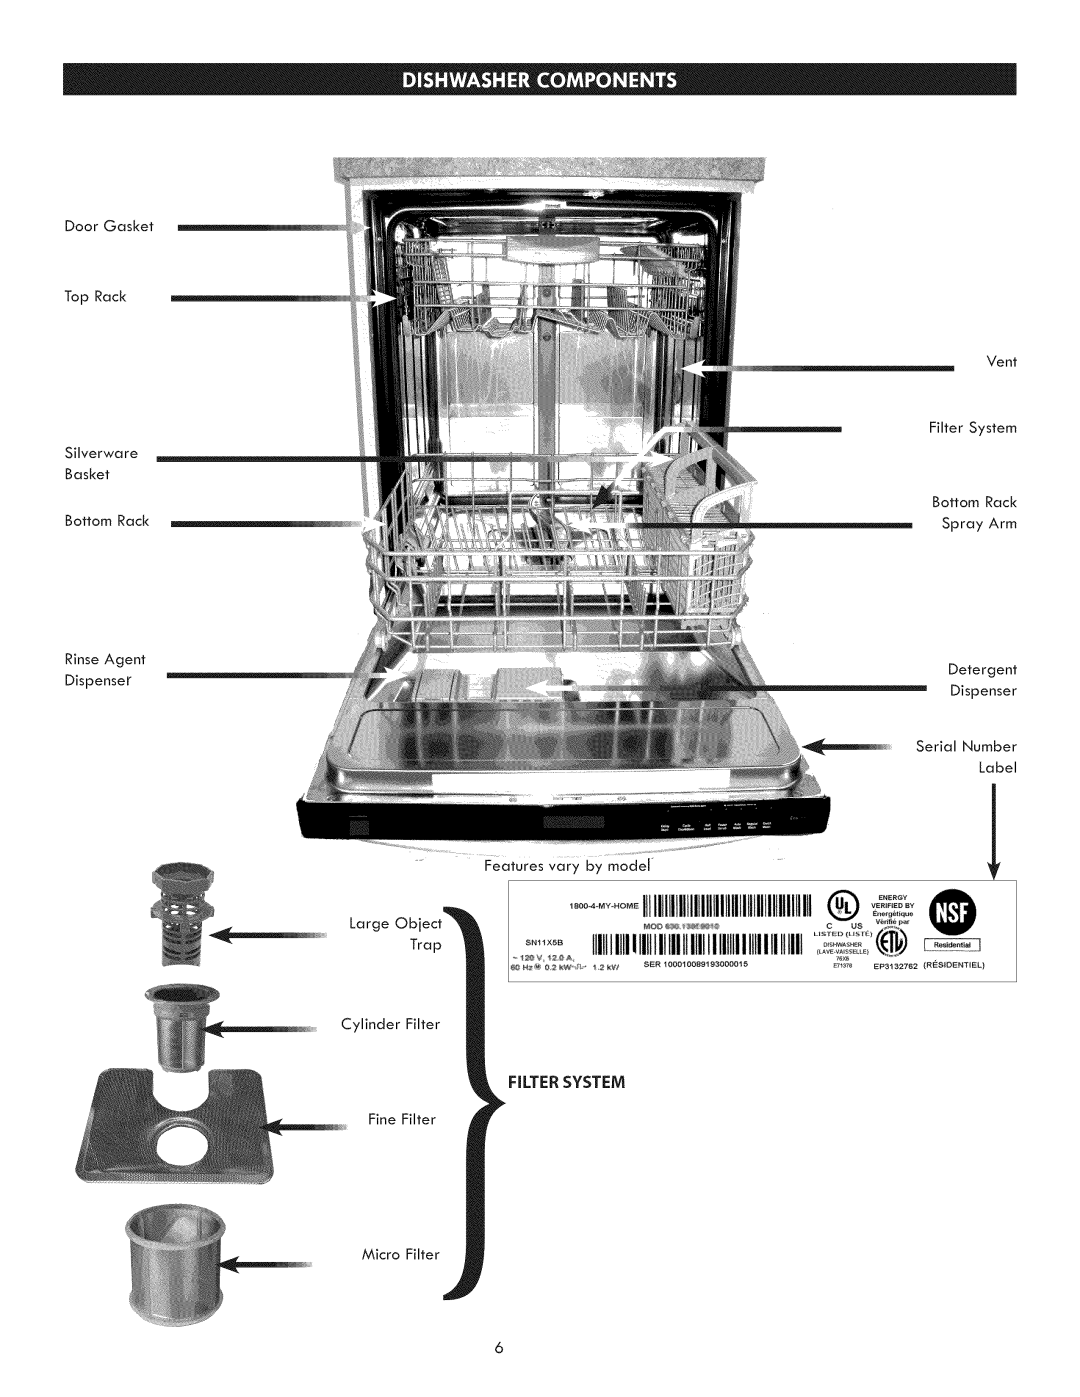 Kenmore 630.1395 manual Filtersystem, Bottom Rack Spray Arm Detergent Dispenser, Micro Filter, EP3132762 RI SIDENTtEL 